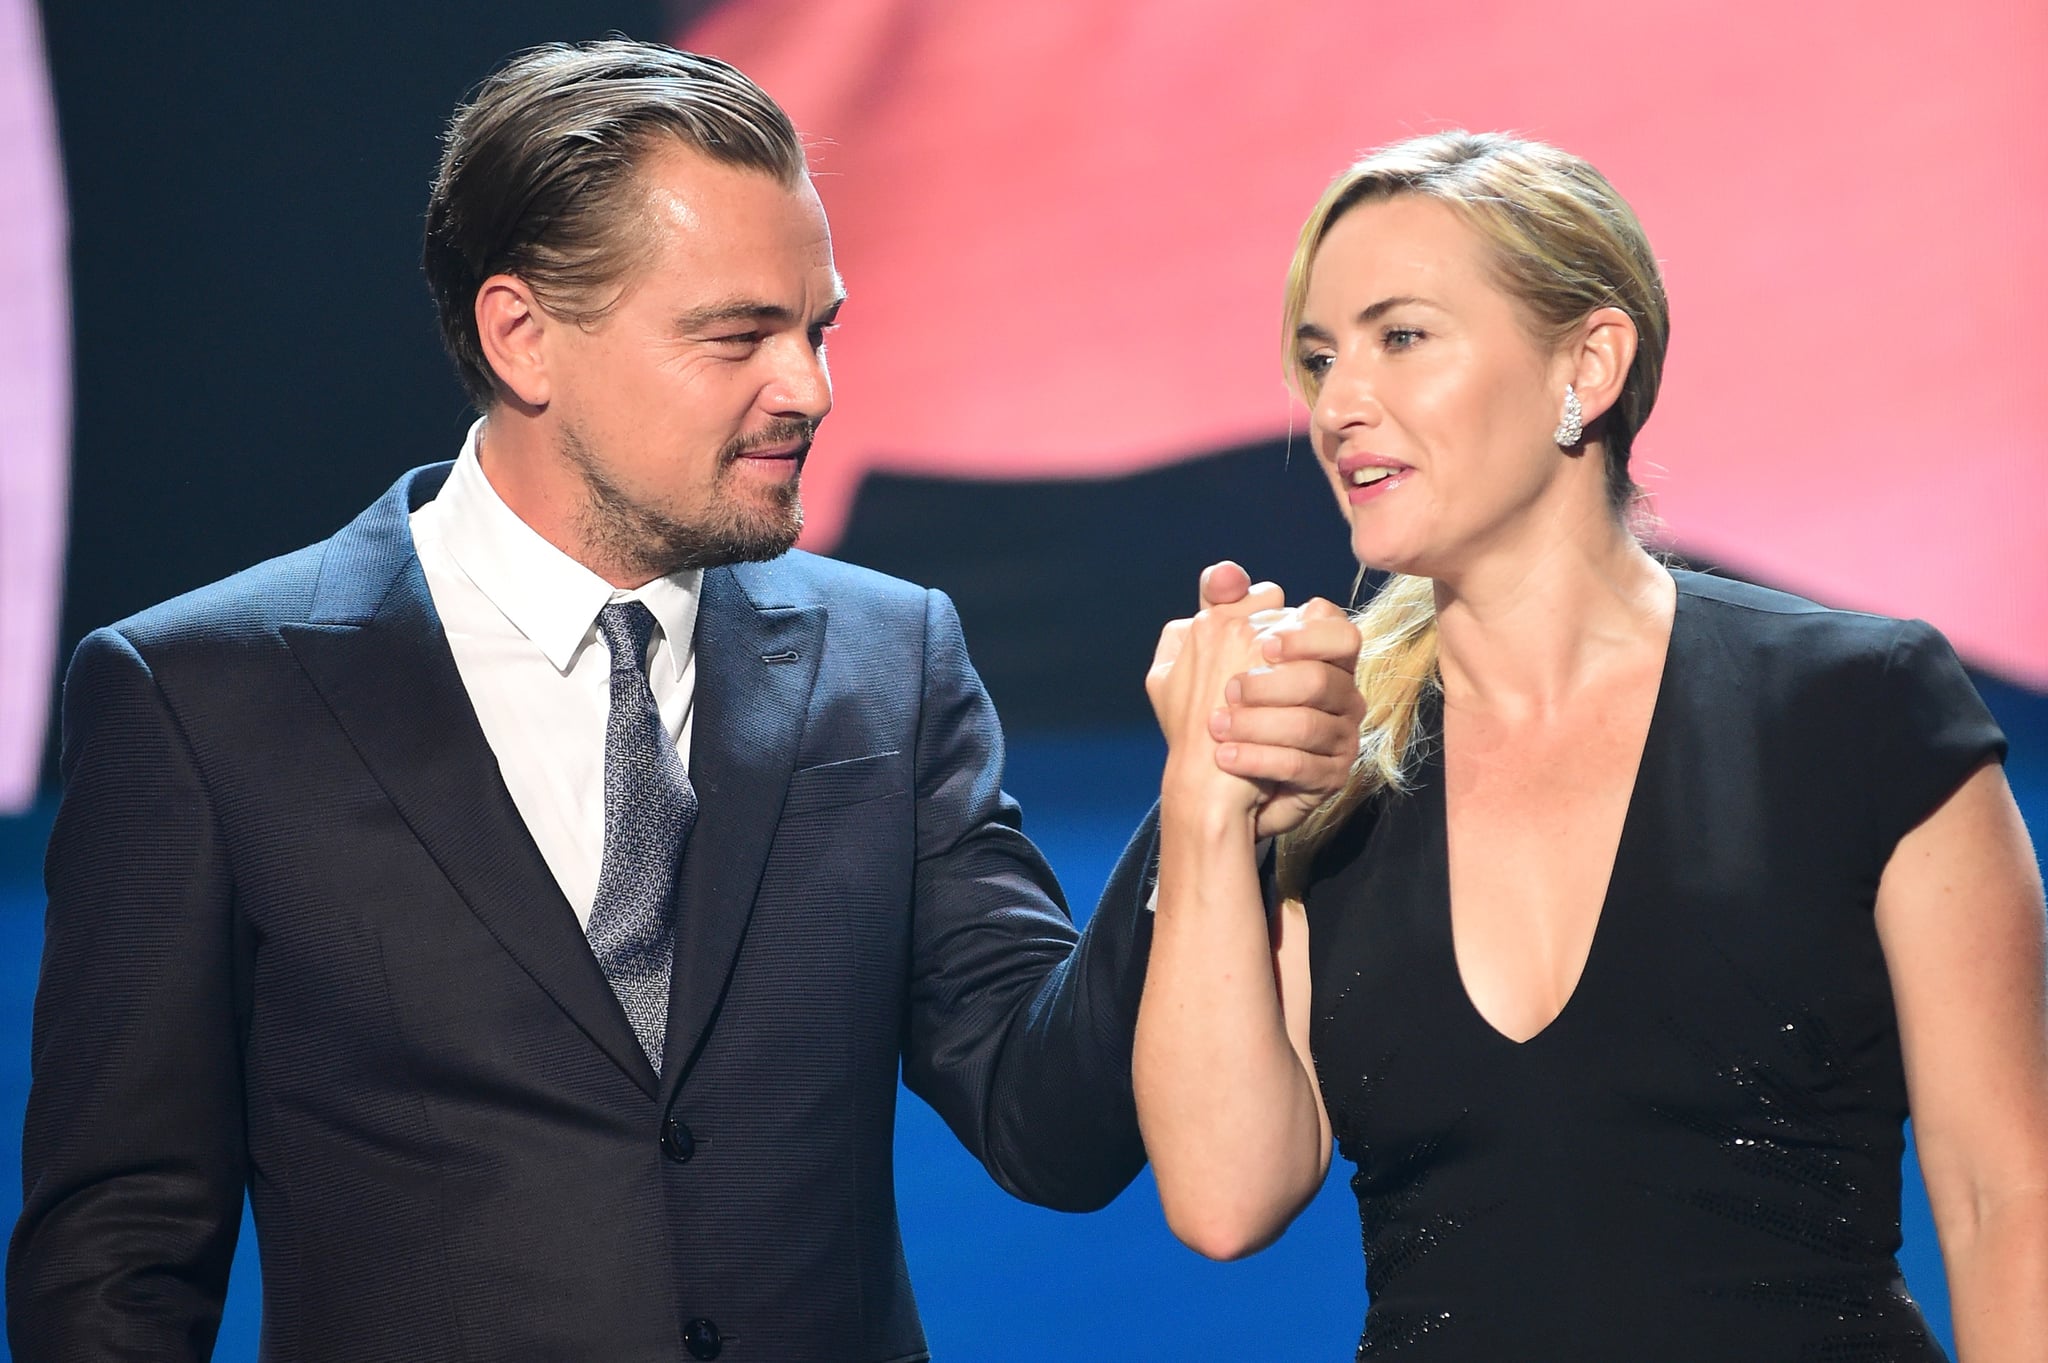 Kate Winslet and Leonardo DiCaprio Pictures | POPSUGAR Celebrity